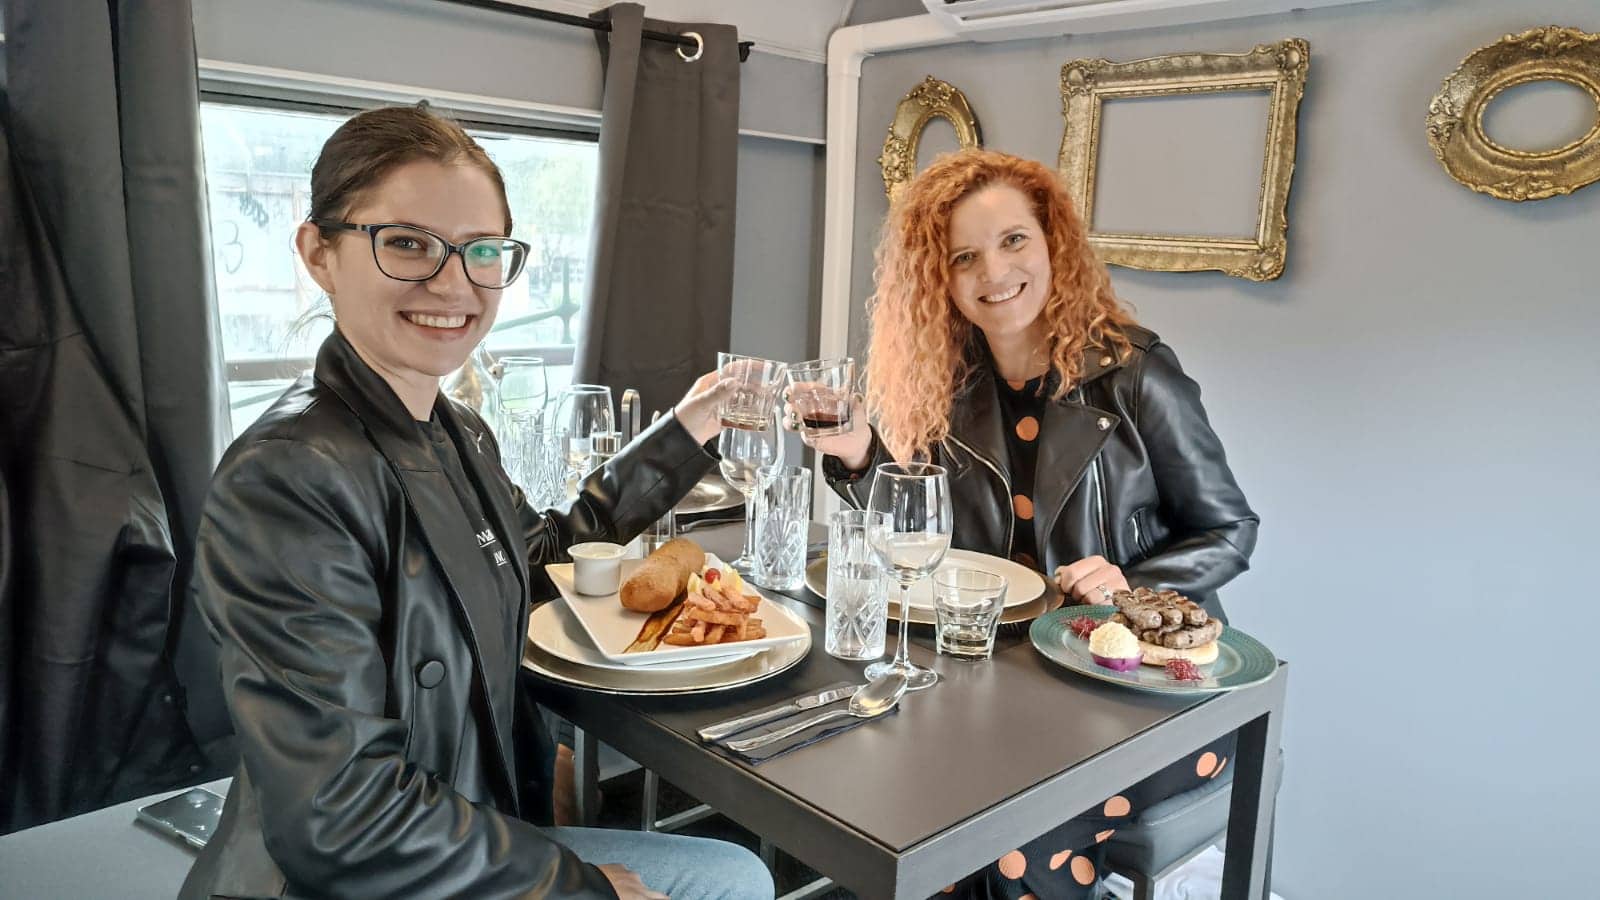 Extravagant experience: ručali smo u posebnom restoranu unutar vagona - Balkan Express Zagreb!